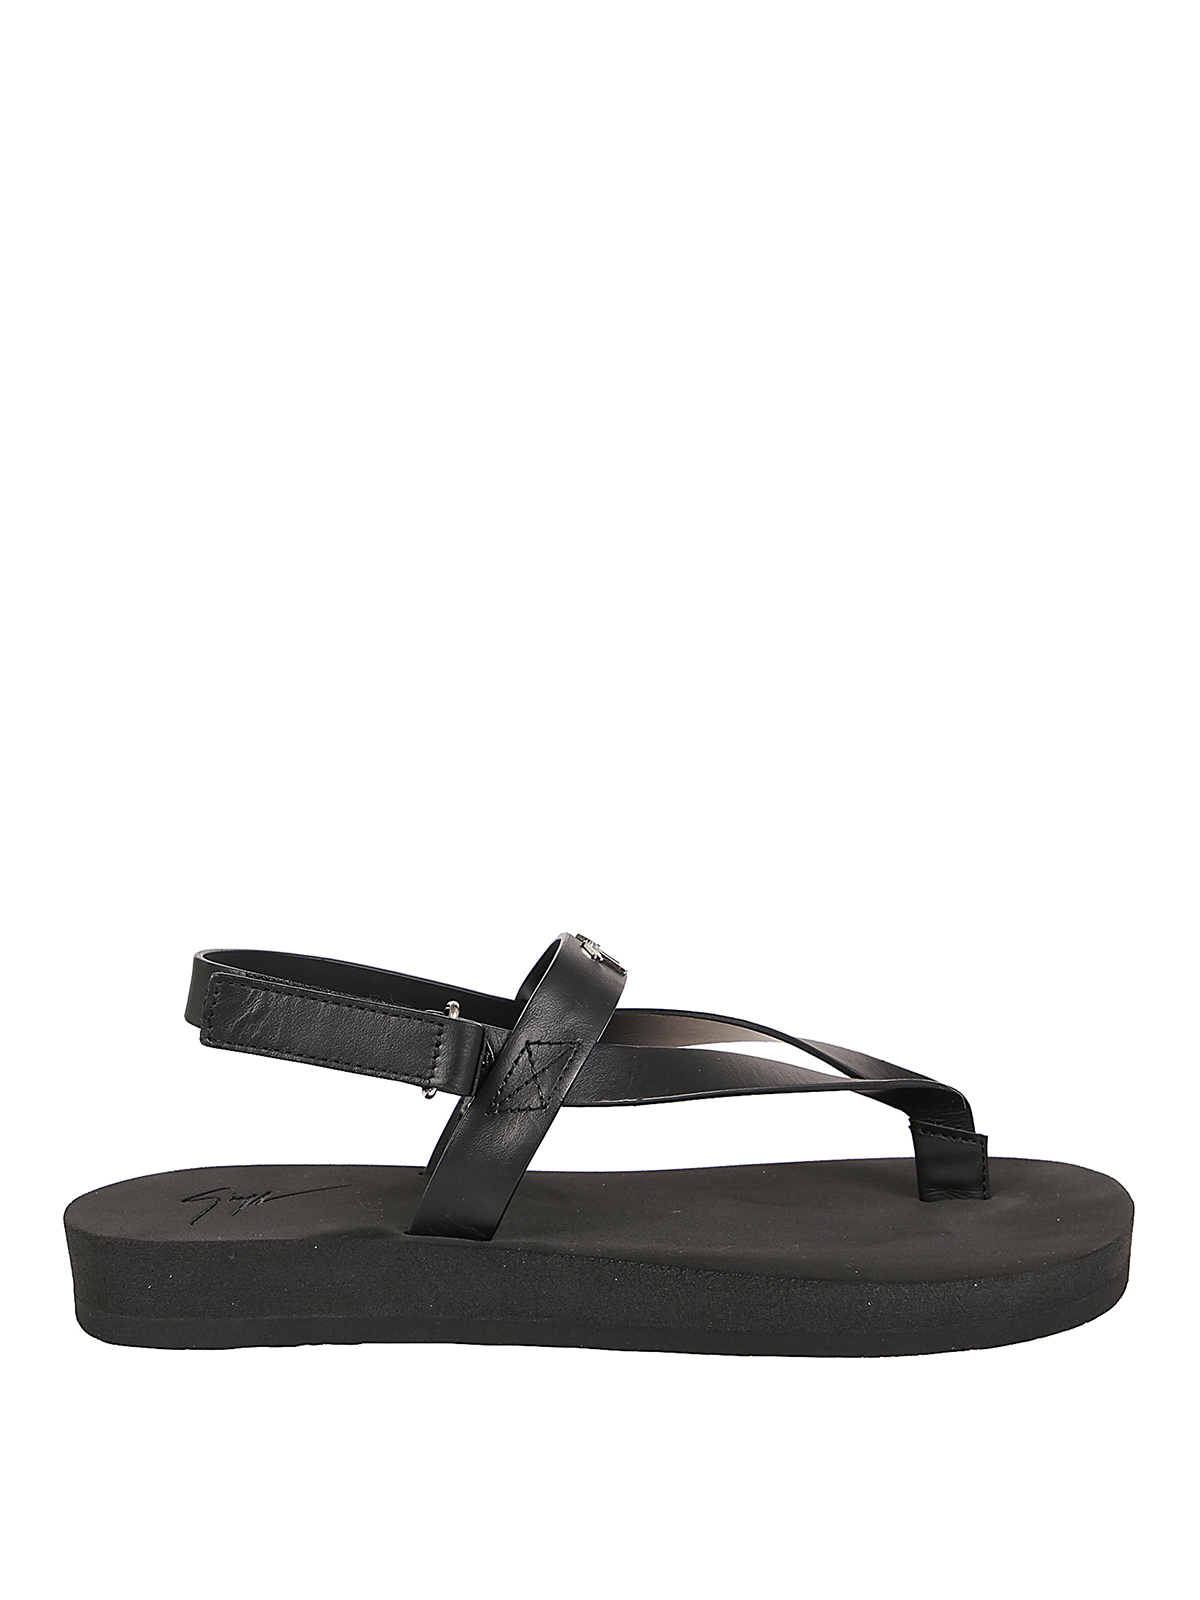 Sandals Giuseppe Zanotti - Hydra sandals - E100026001 | iKRIX.com